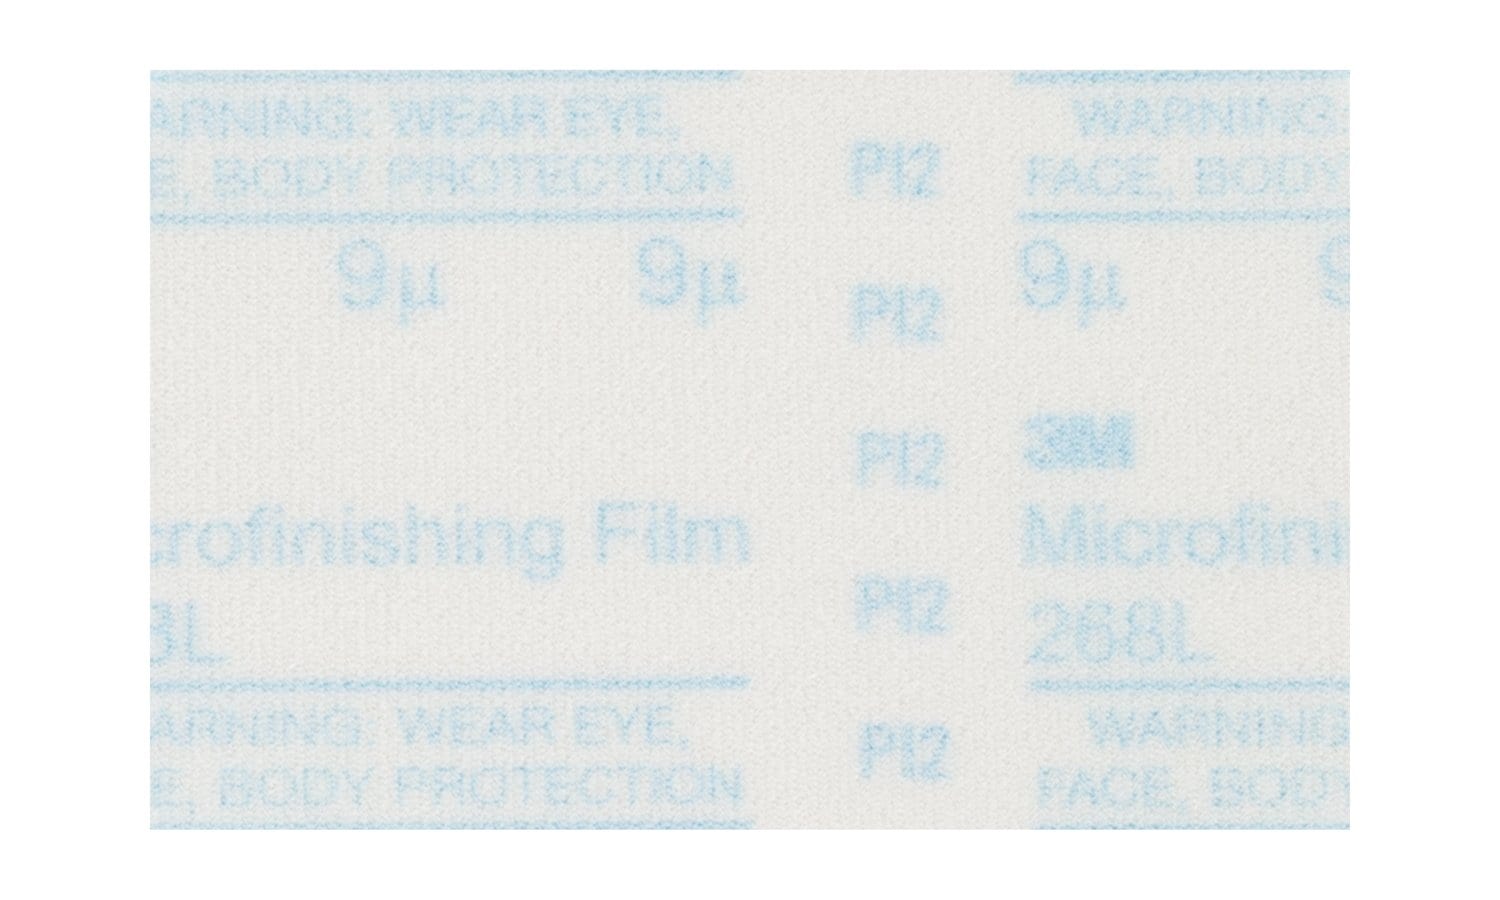 7100047230 - 3M Microfinishing Film Sheet 268L, 20 Mic, Type D, Unbacksized, Config